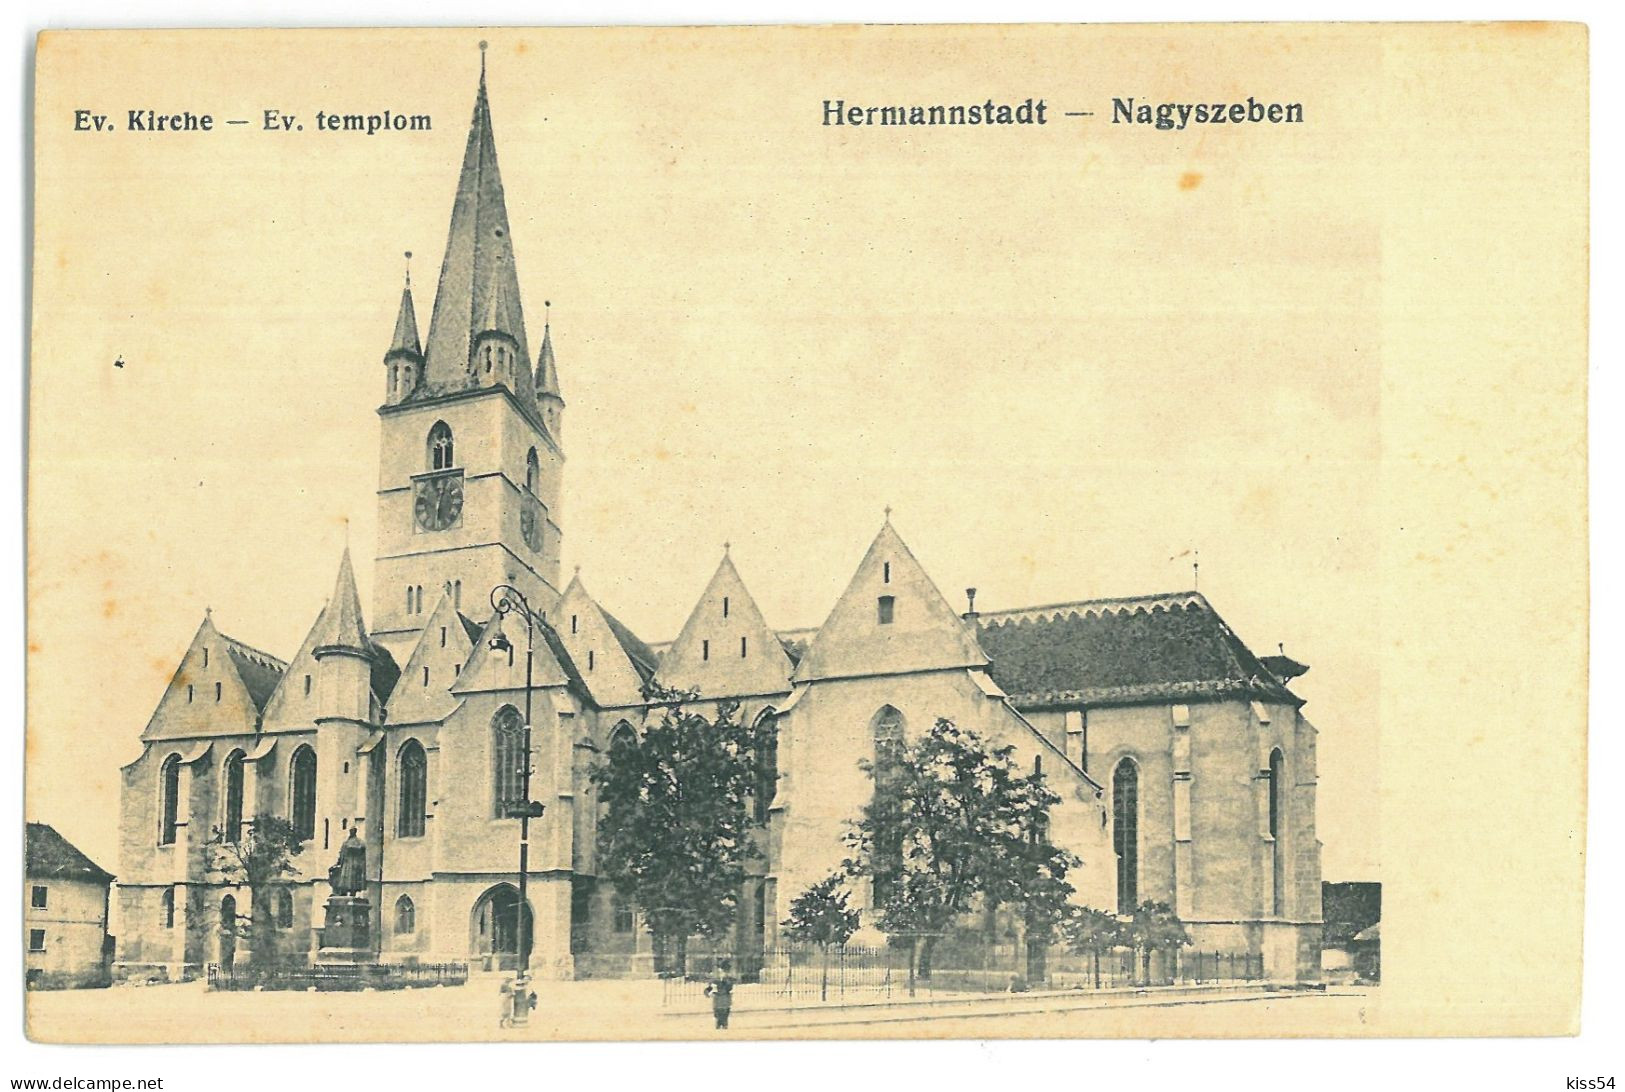 RO 86 - 23300 SIBIU, Evangelical Church, Romania - Old Postcard - Unused - 1917 - Roemenië